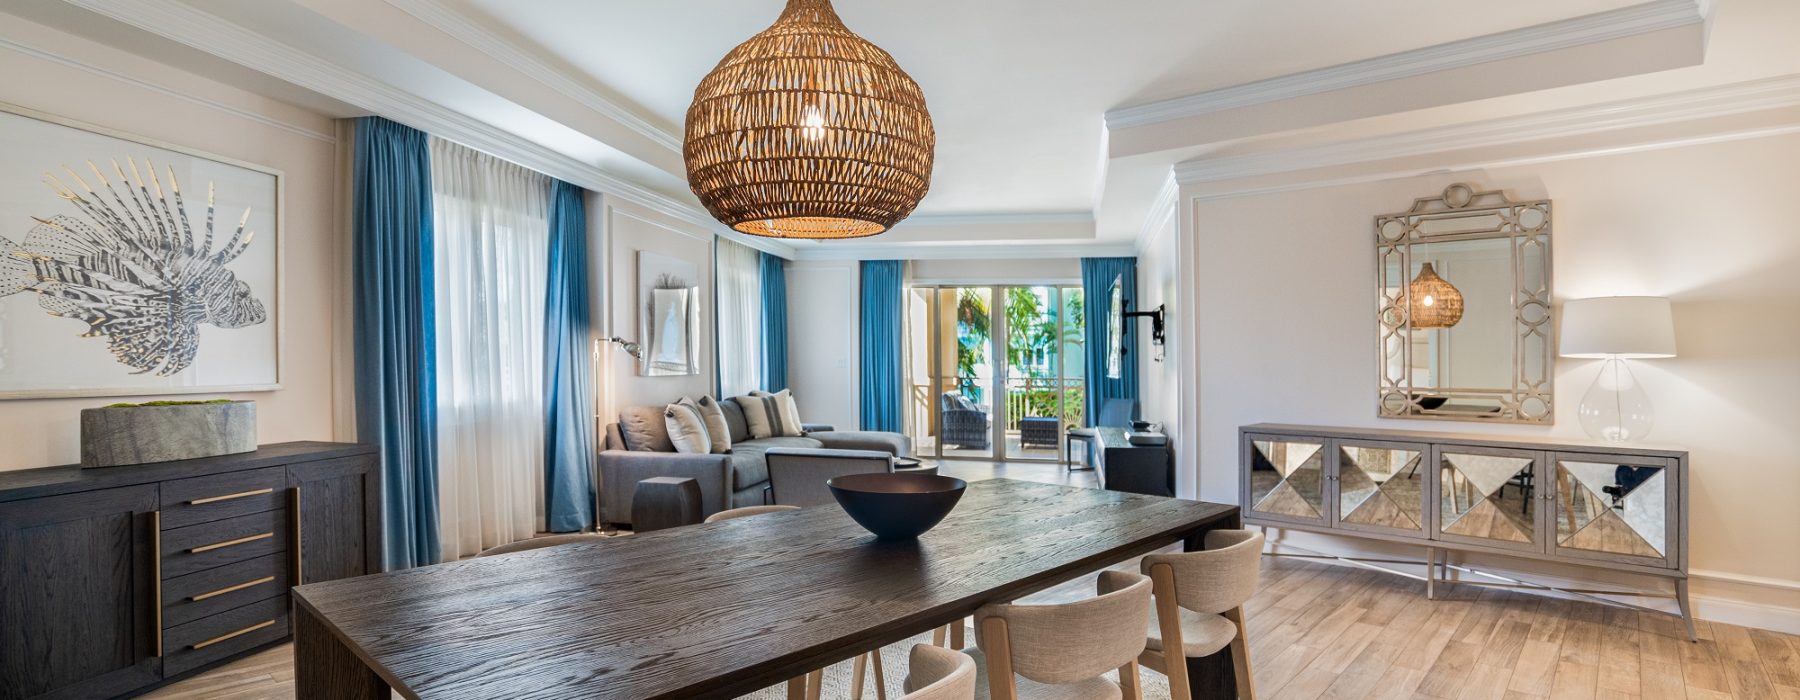 Residence 201 - The Ritz-Carlton, Grand Cayman 4 - Copy